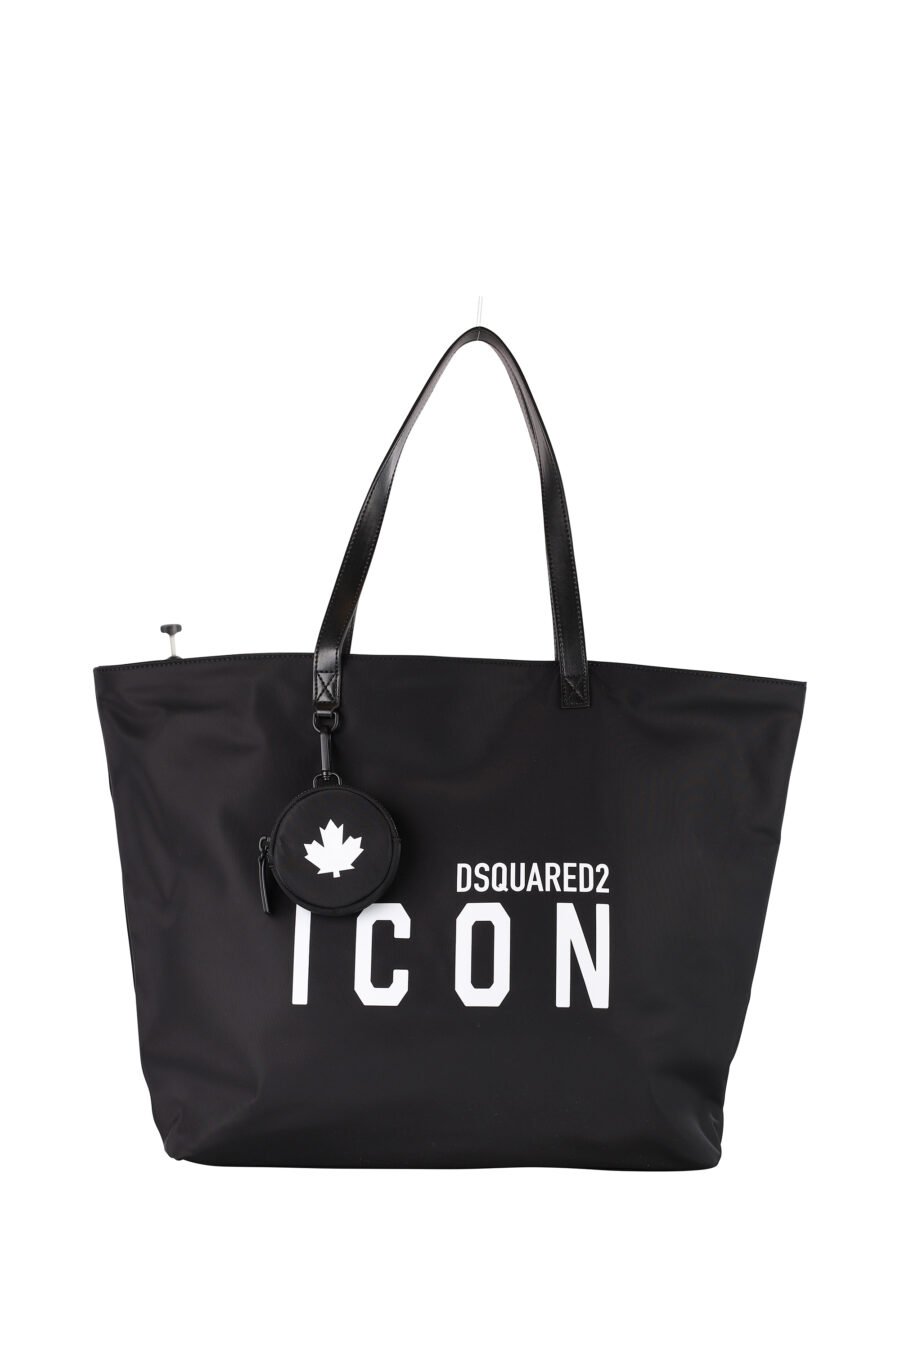 Black shopper bag with "Icon" logo - IMG 1339